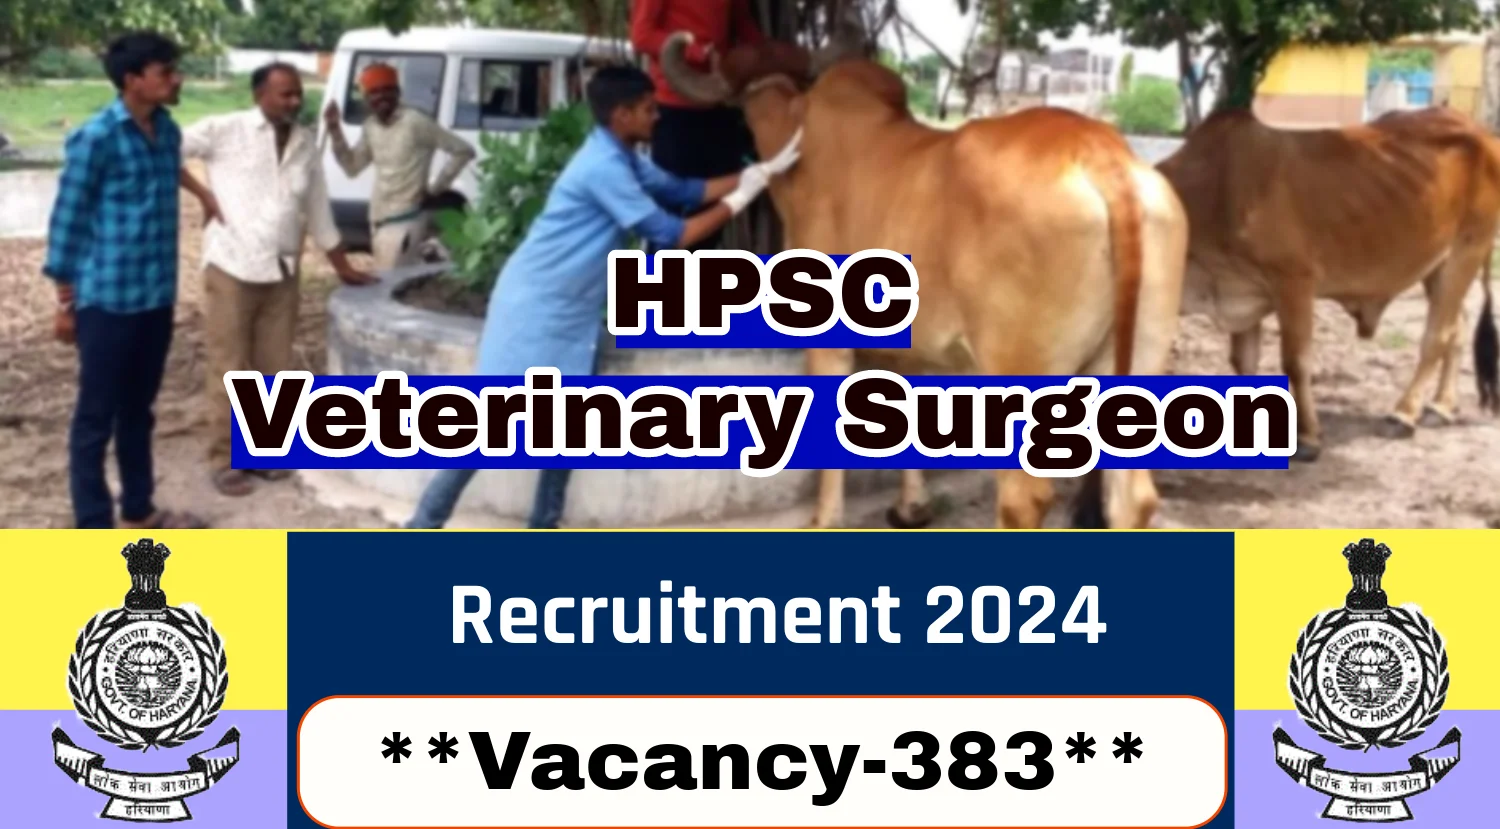 HPSC Veterinary Surgeon Recruitment 2024 for 383 Posts, Check Haryana Veterinary Surgeon Re-Open Details and Exam Date Now